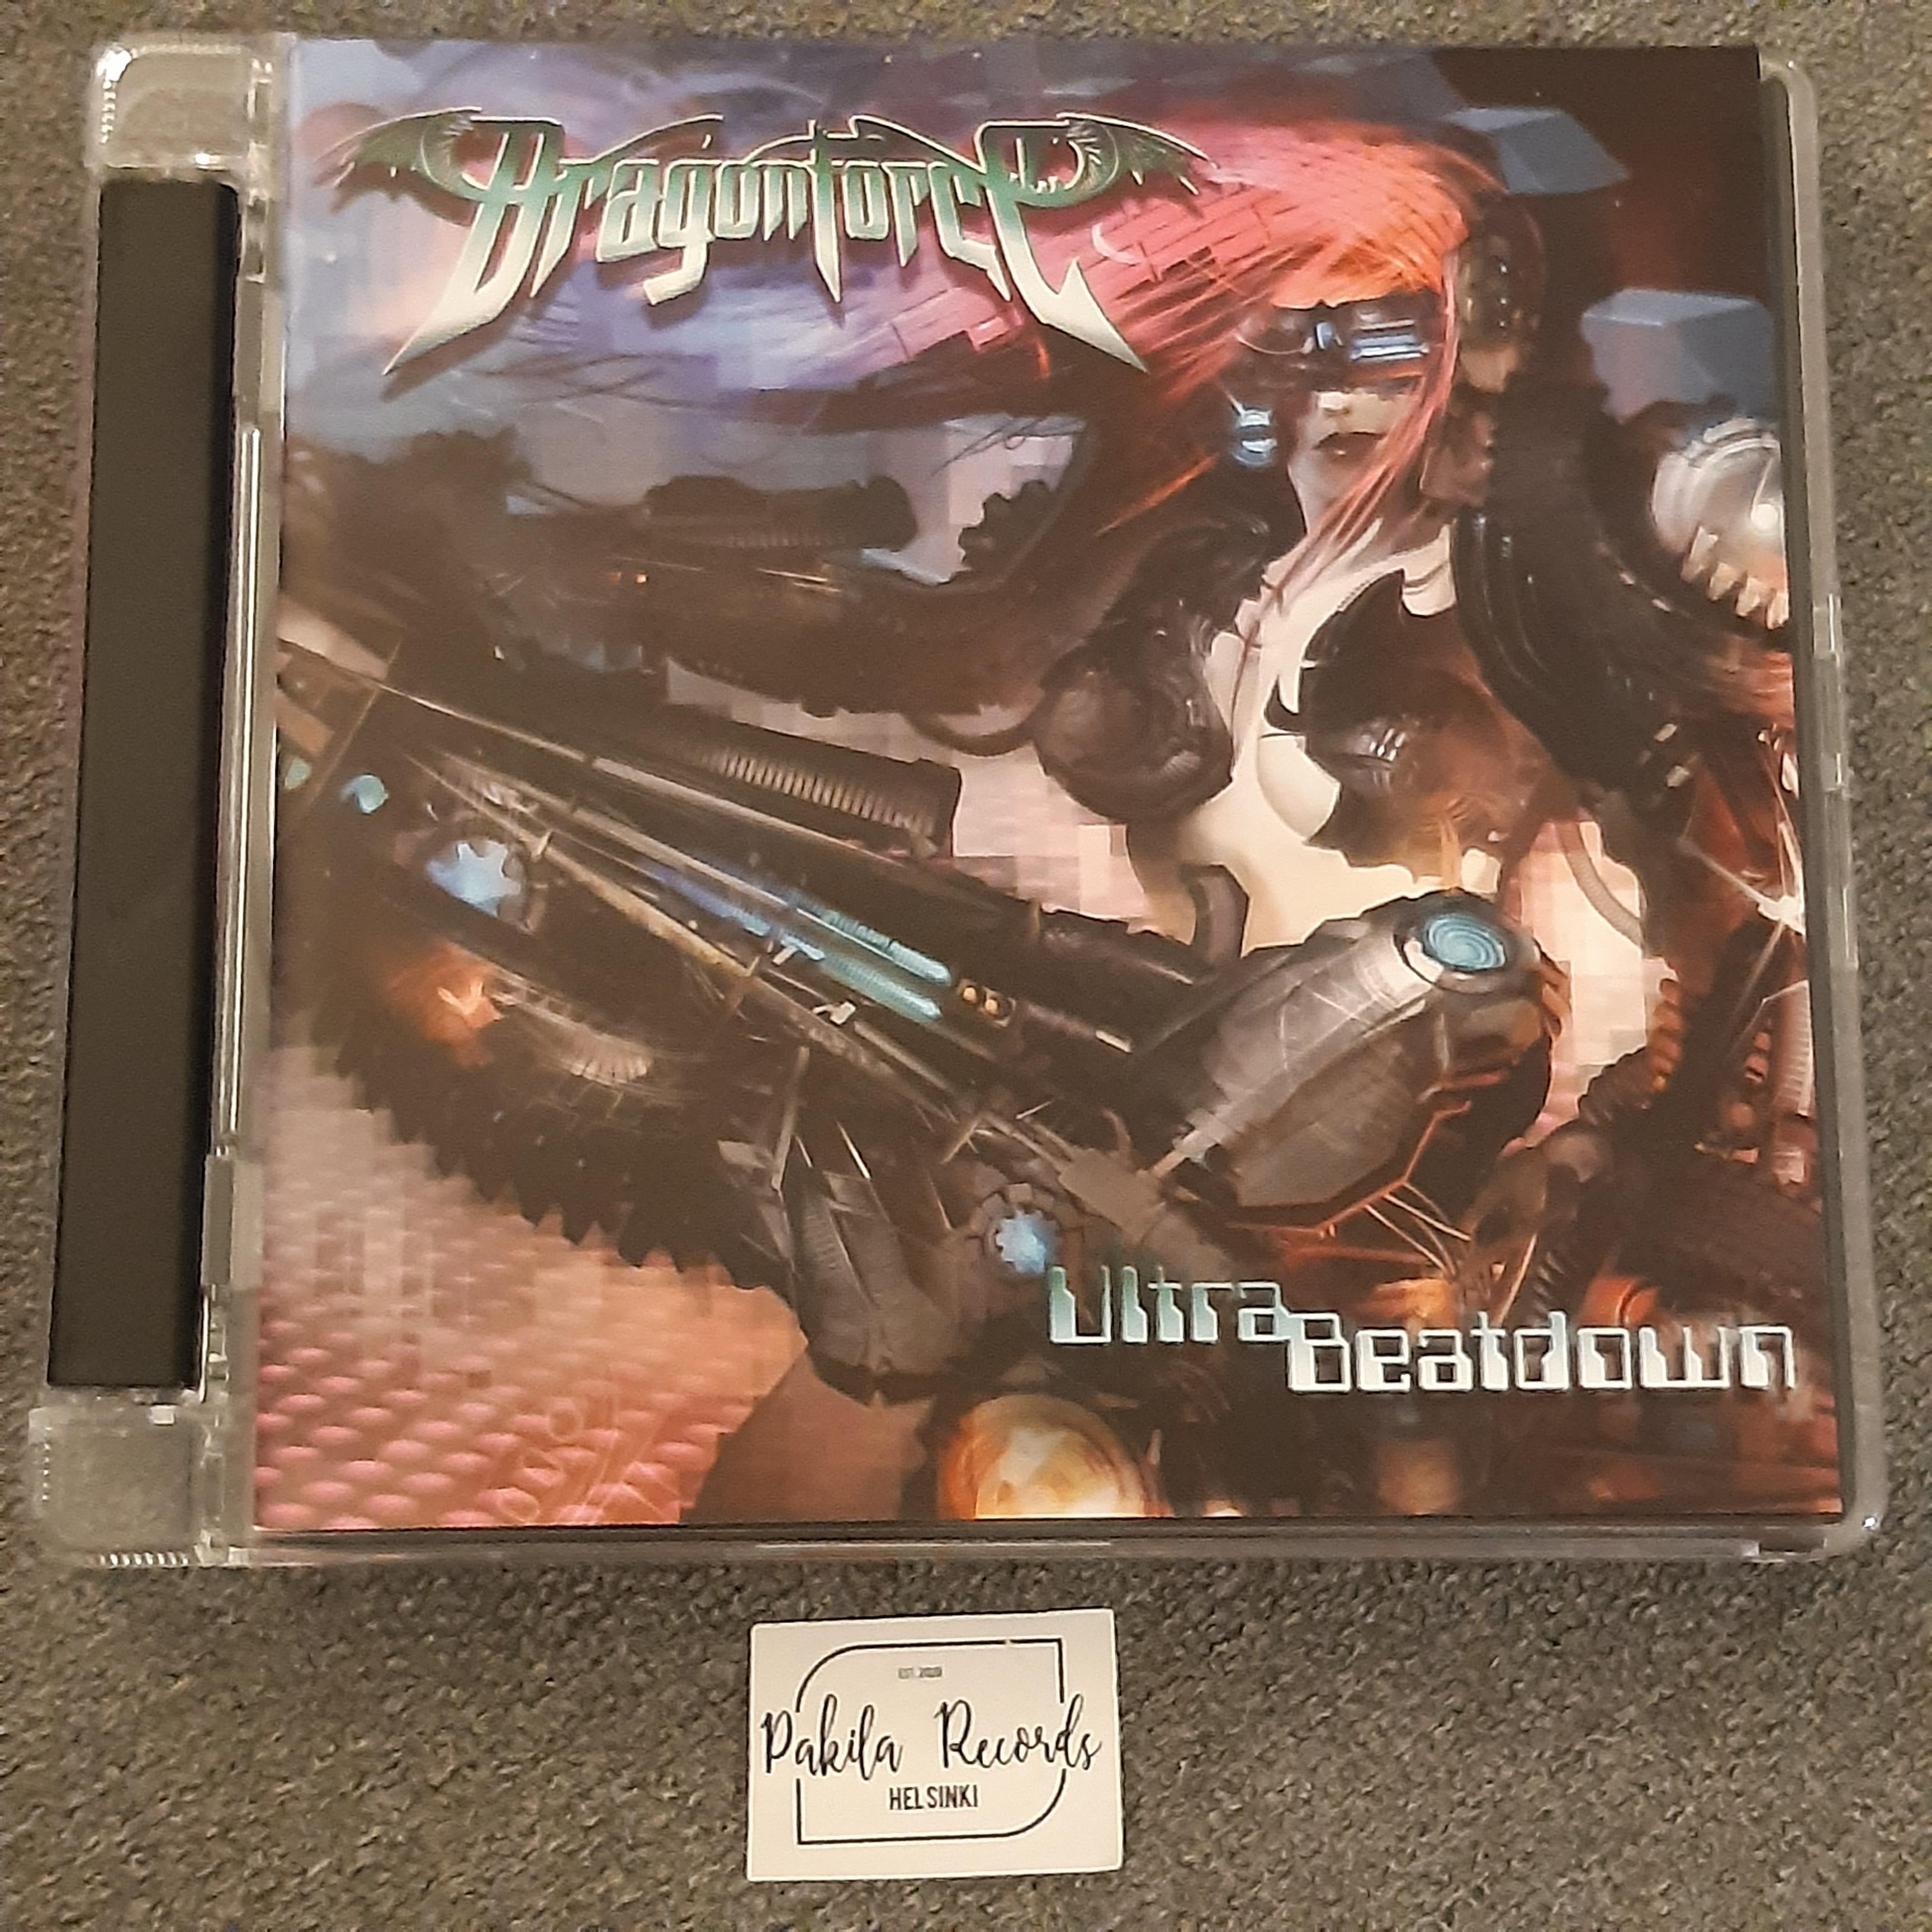 Dragonforce - Ultra Beatdown - CD (käytetty)